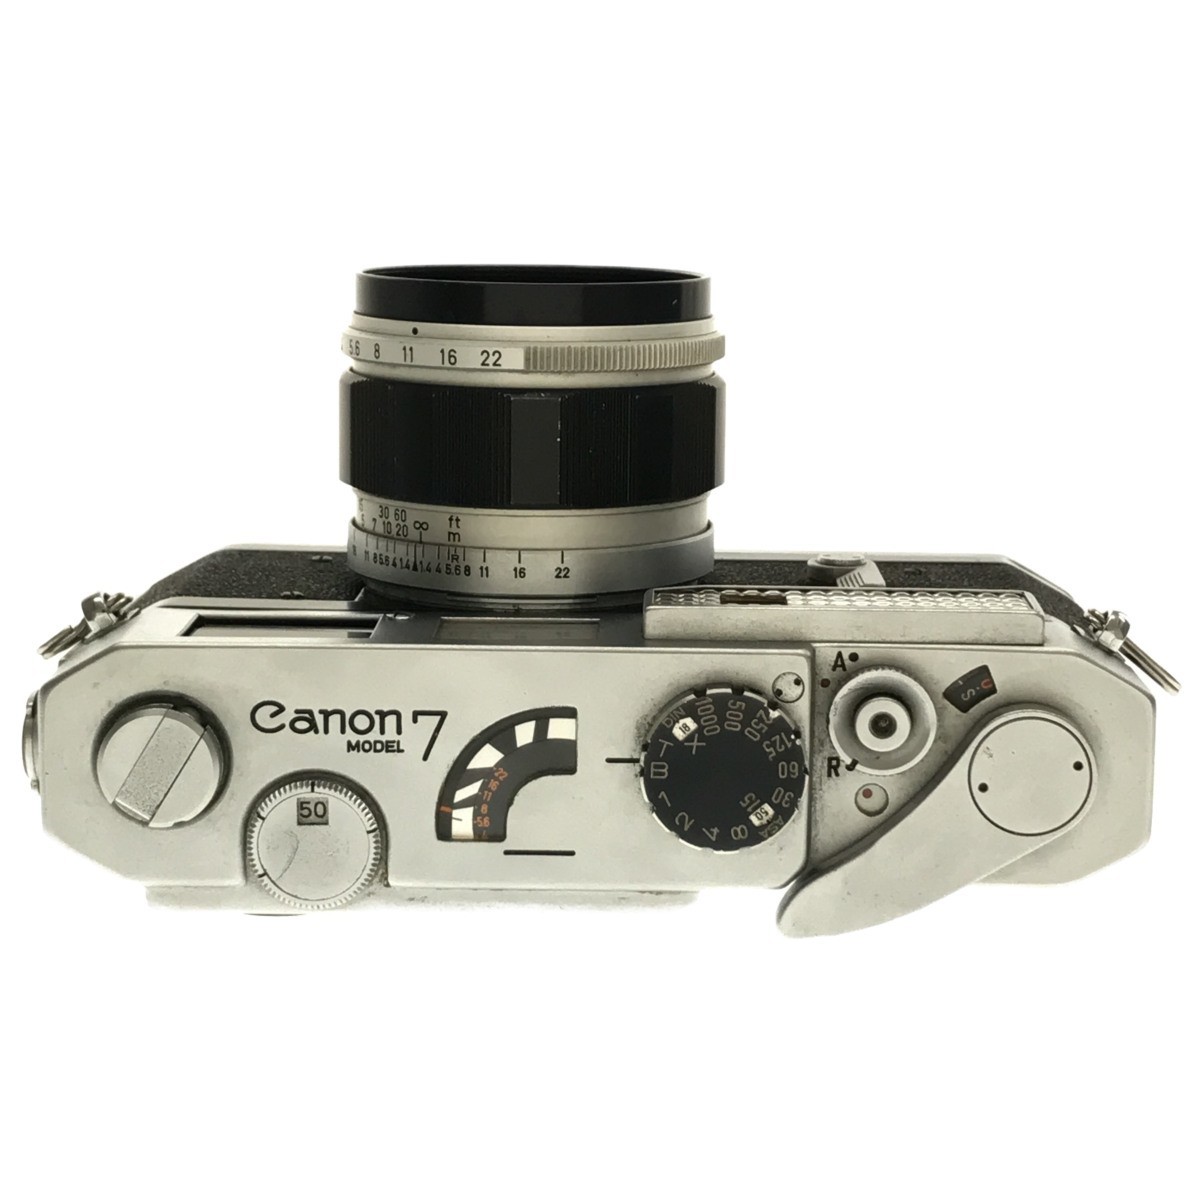 [ working properly goods ]Canon MODEL 7 LENS 50mm F1.4 Canon range finder large diameter standard single burnt point L39 mount MF lens film camera C2653